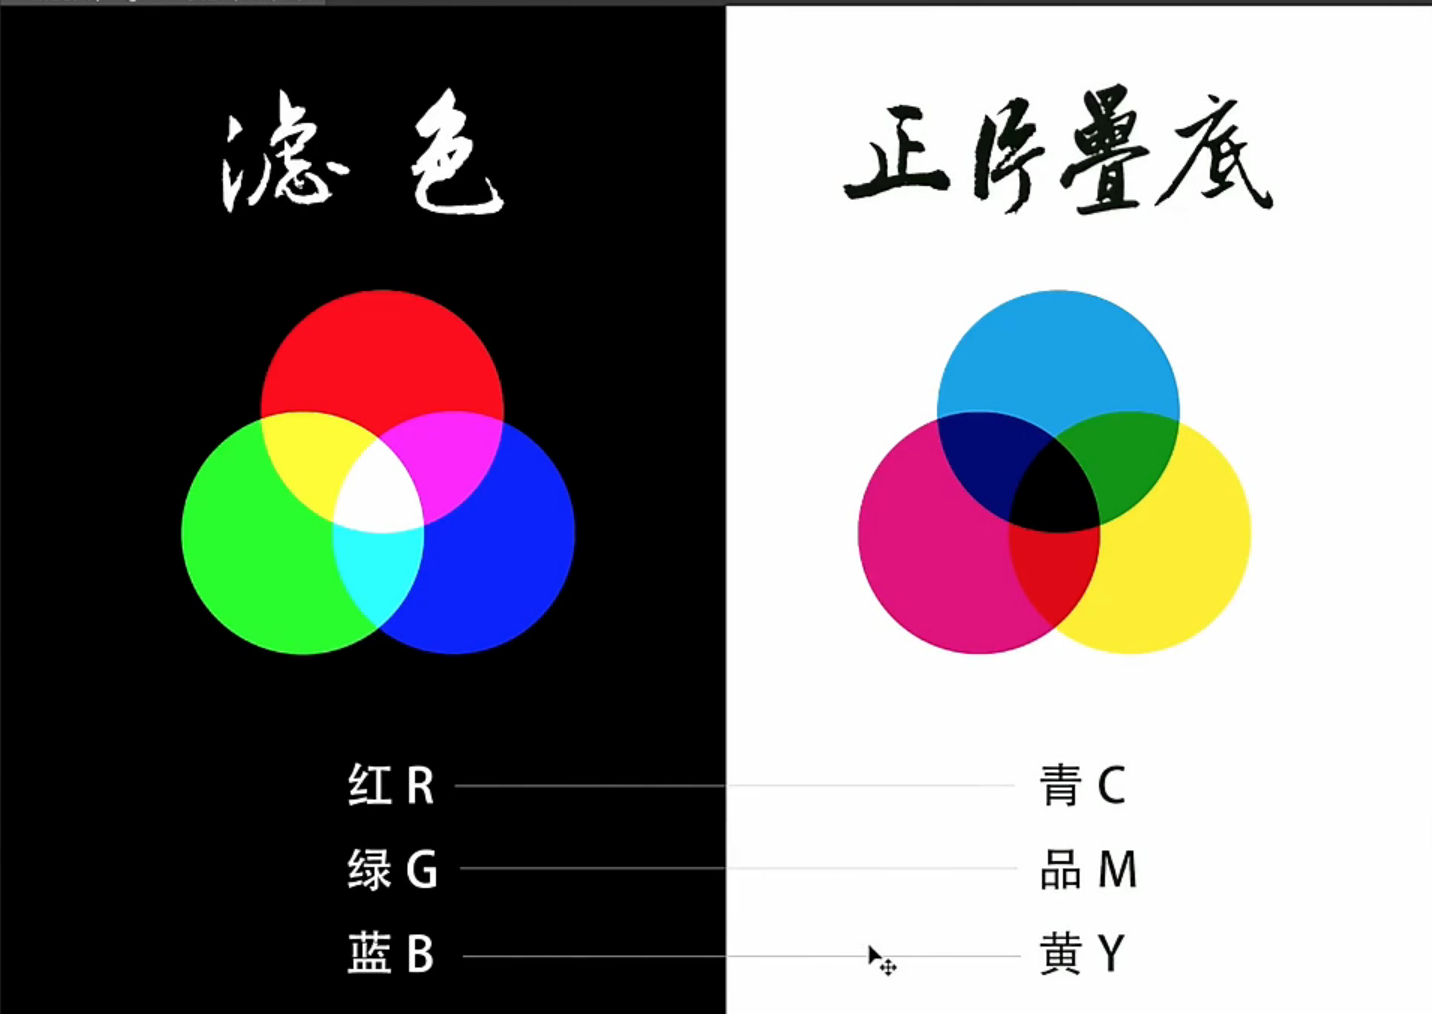 cmyk 和 rgb 这两种色彩模式本质与区别在哪?